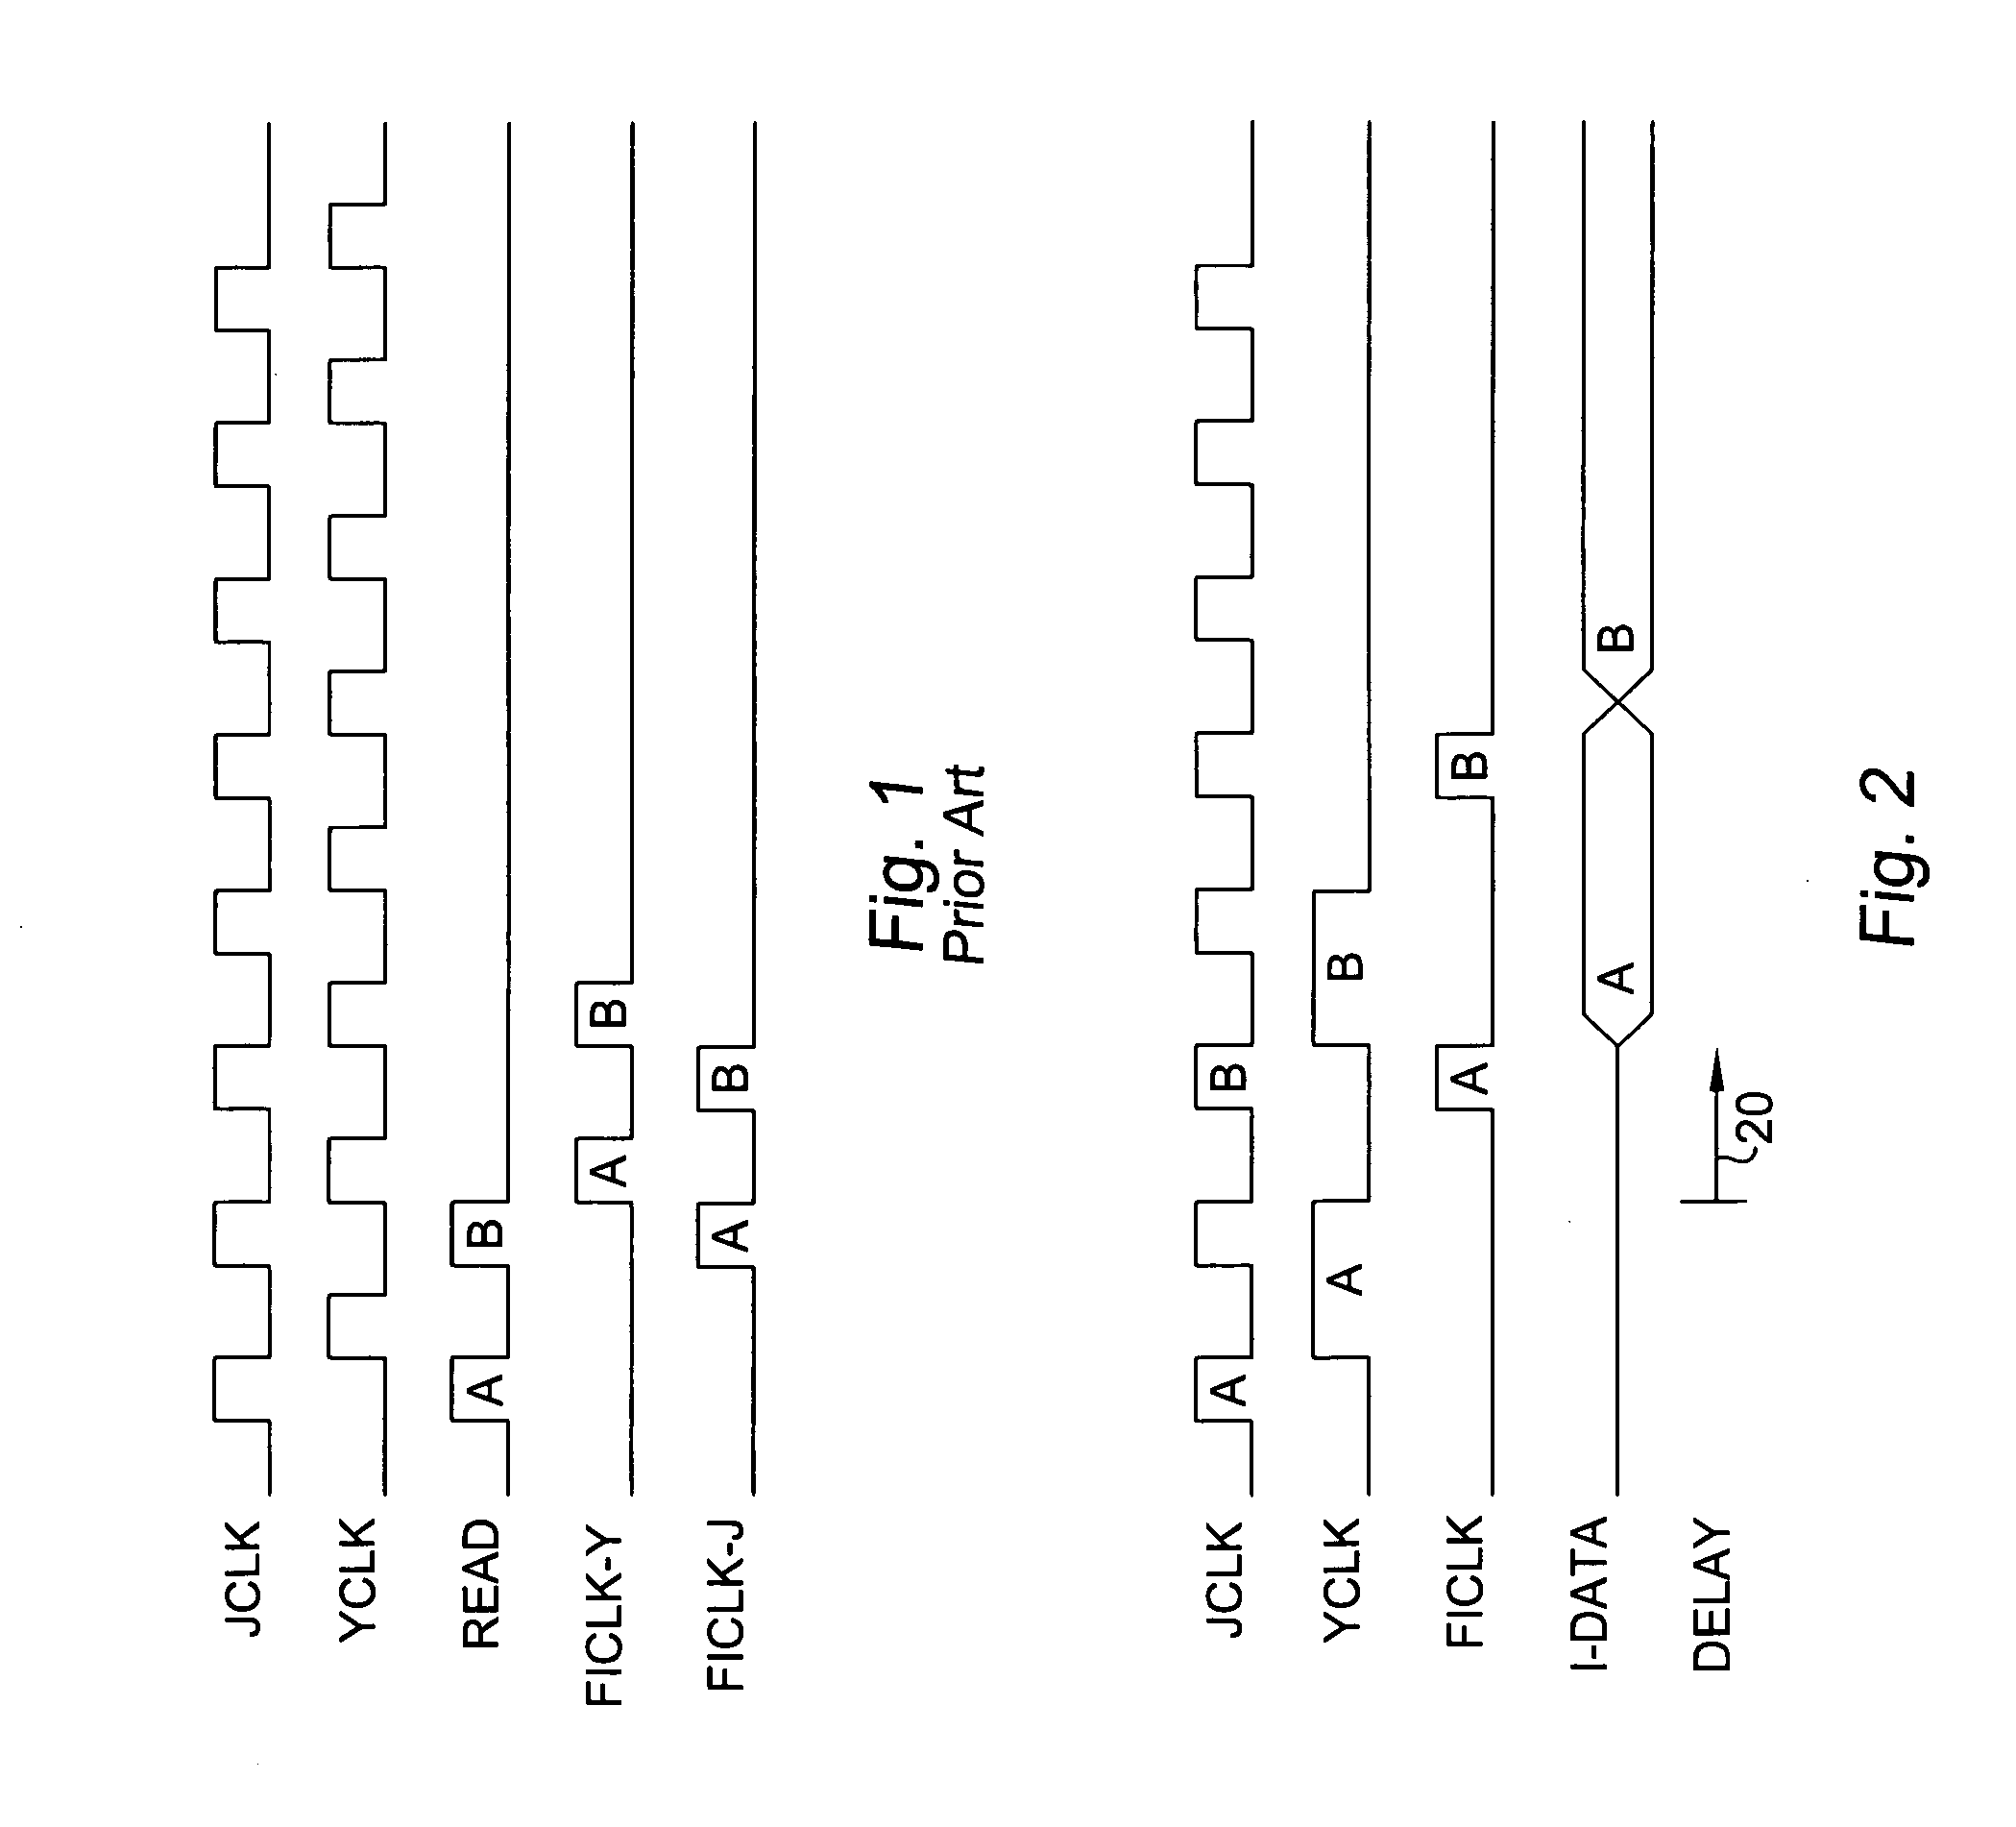 Wide window clock scheme for loading output FIFO registers